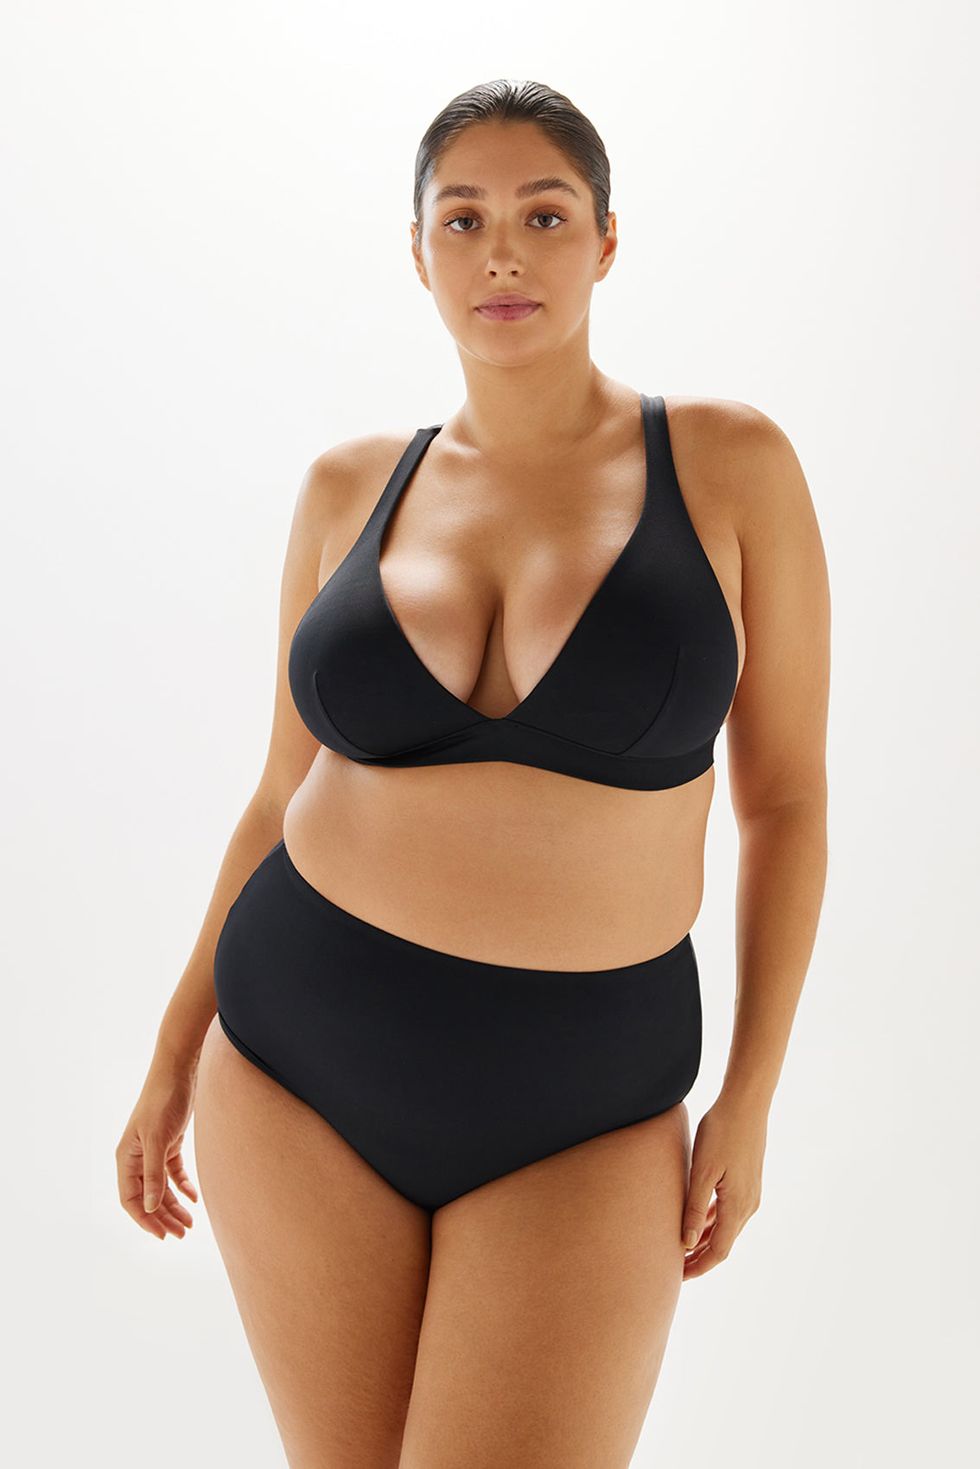 Aligament Swimwears Tankinis Set For Women Detachable Breast Pads